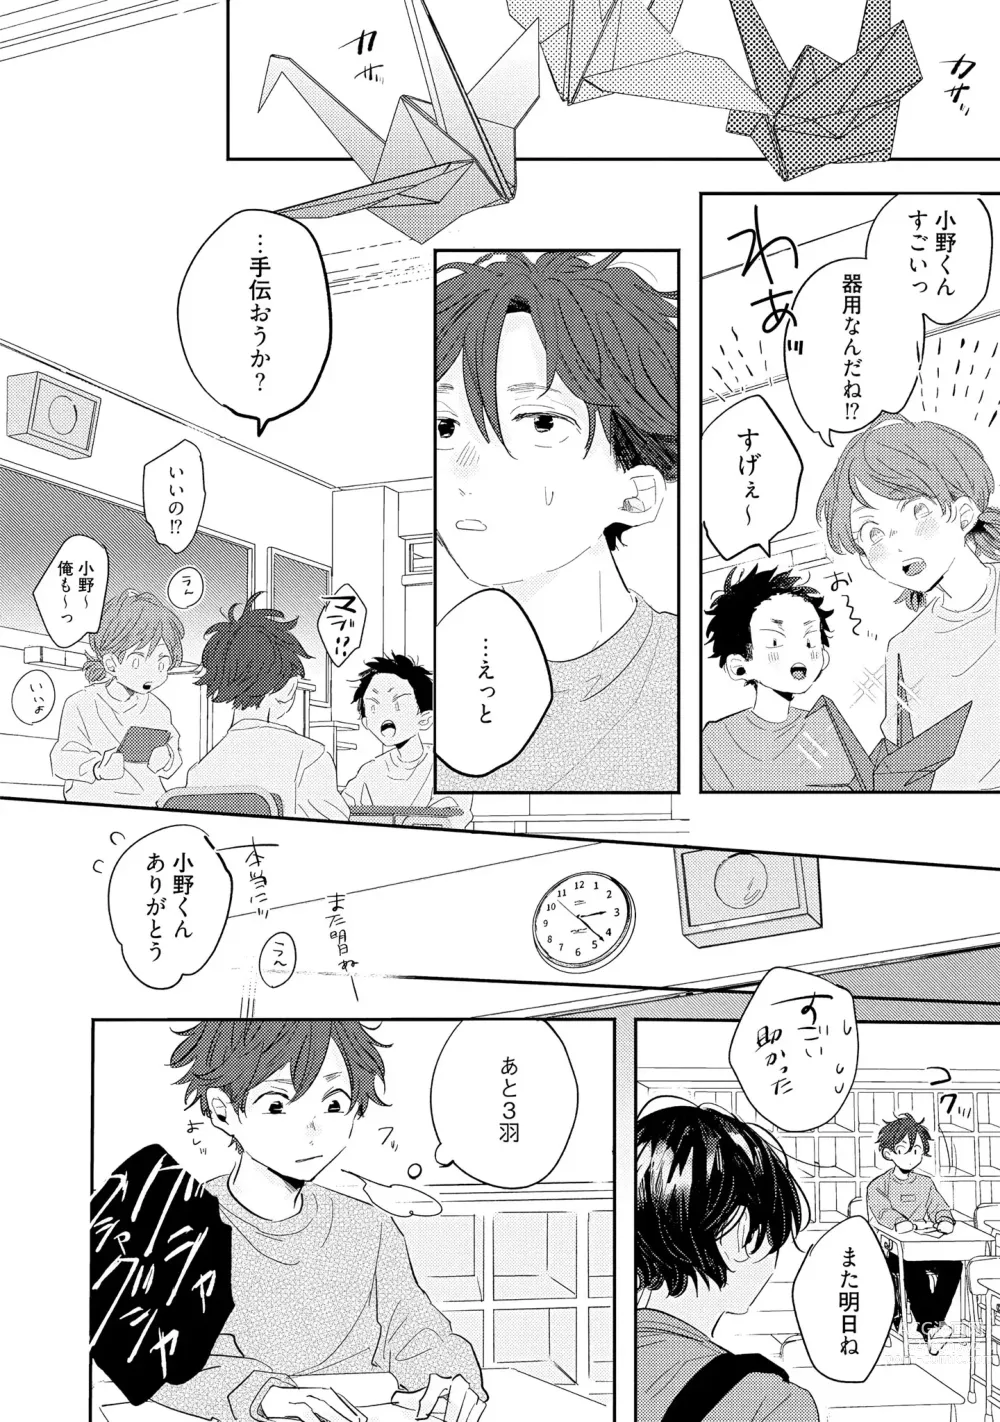 Page 10 of manga No Doubt Lilac